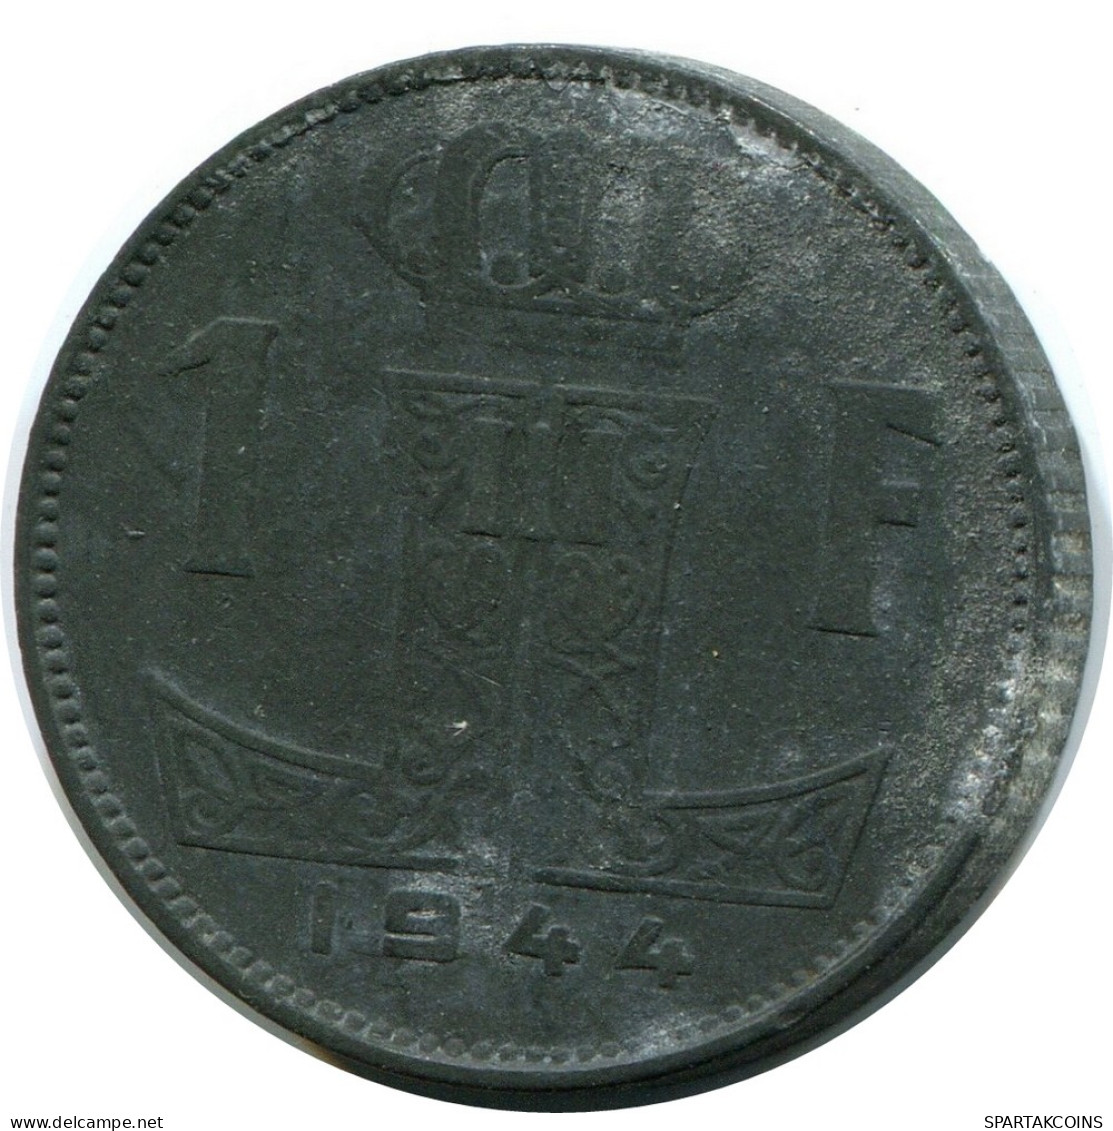 1 FRANC 1944 BELGIUM Coin #AW914.U - 1 Franc